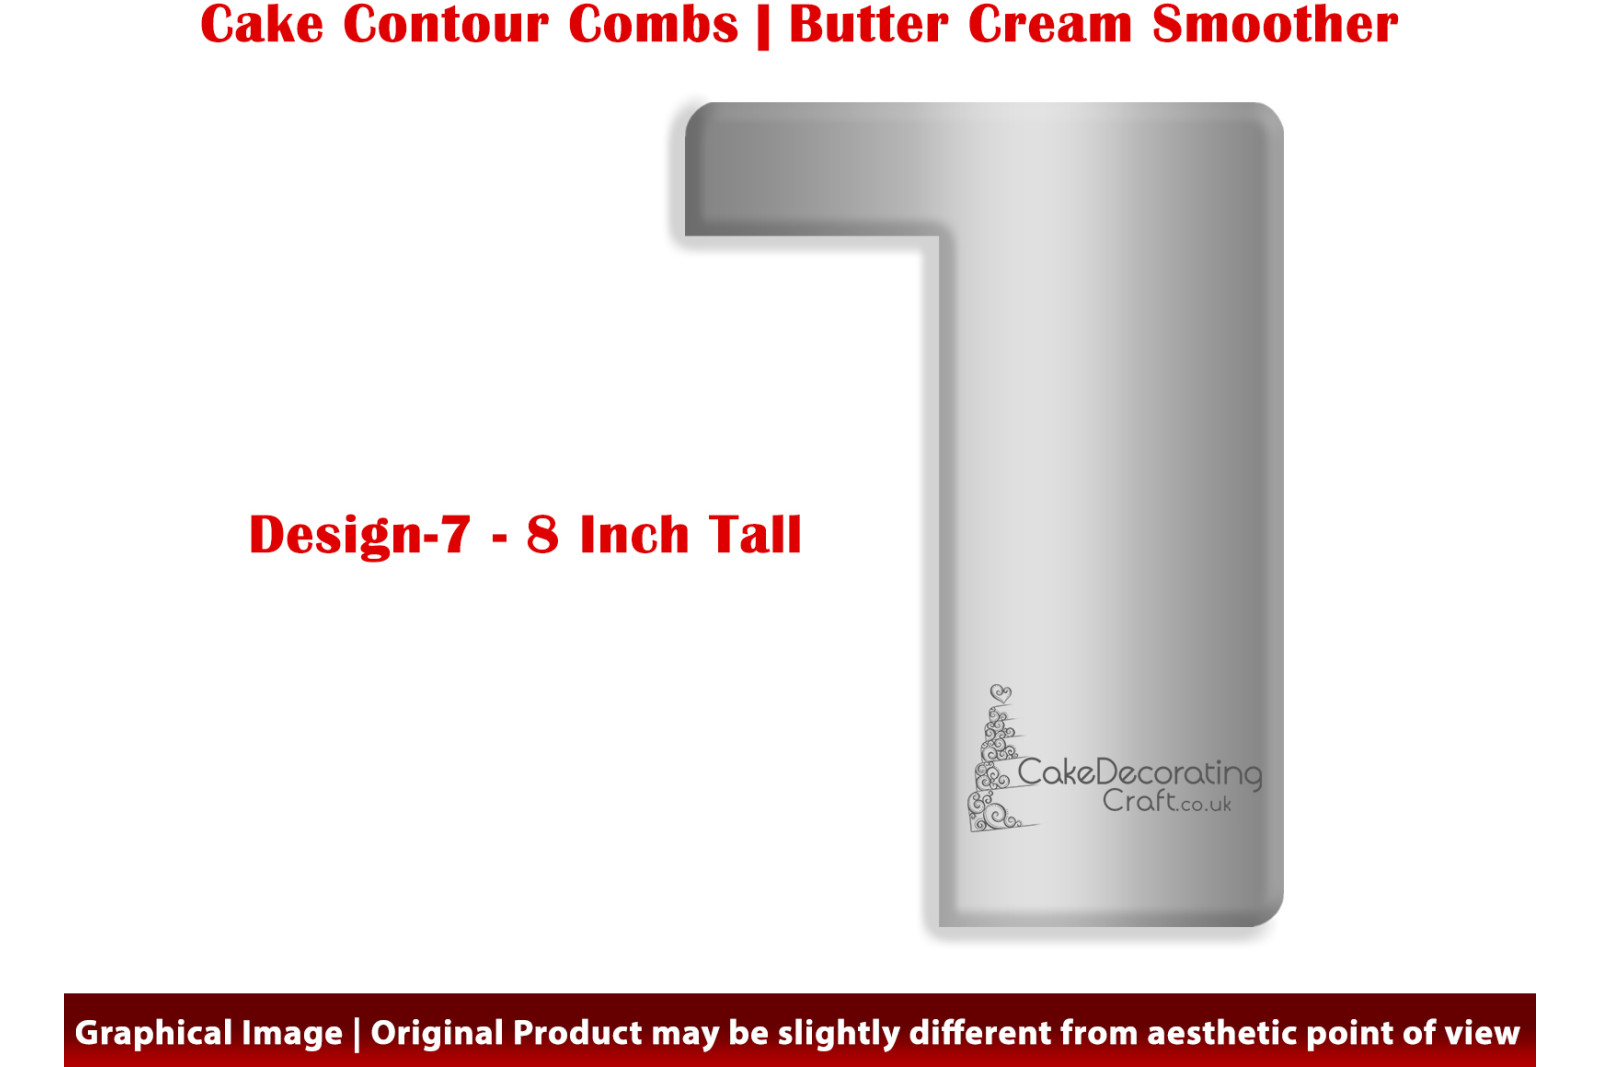 Crisp Corner | Design 7 | 8 Inch | Cake Decorating Craft | Cake Contour Combs | Smoothing | Metal Spreader | Butter Cream Smoothing | Genius Tool